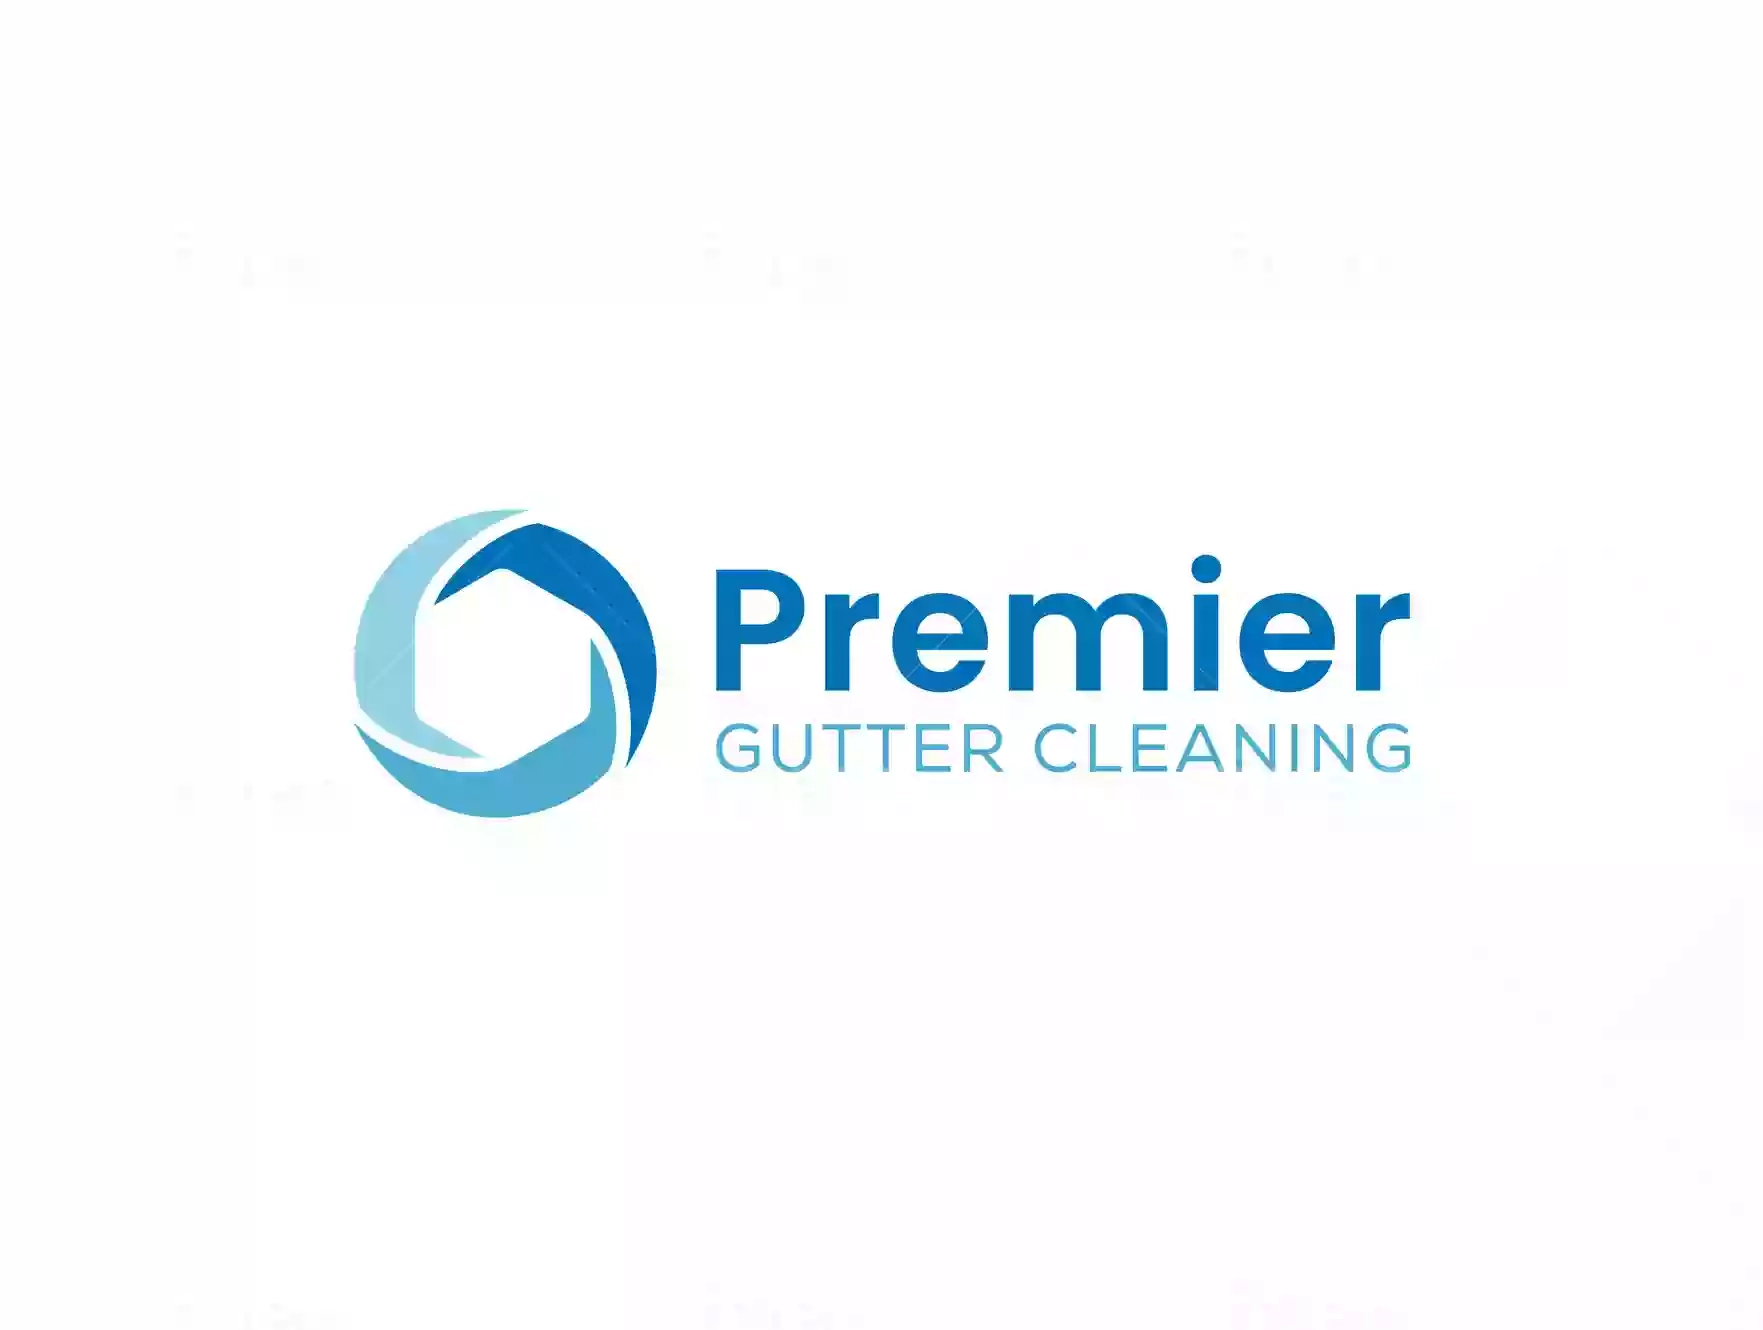 Premier Gutter Cleaning